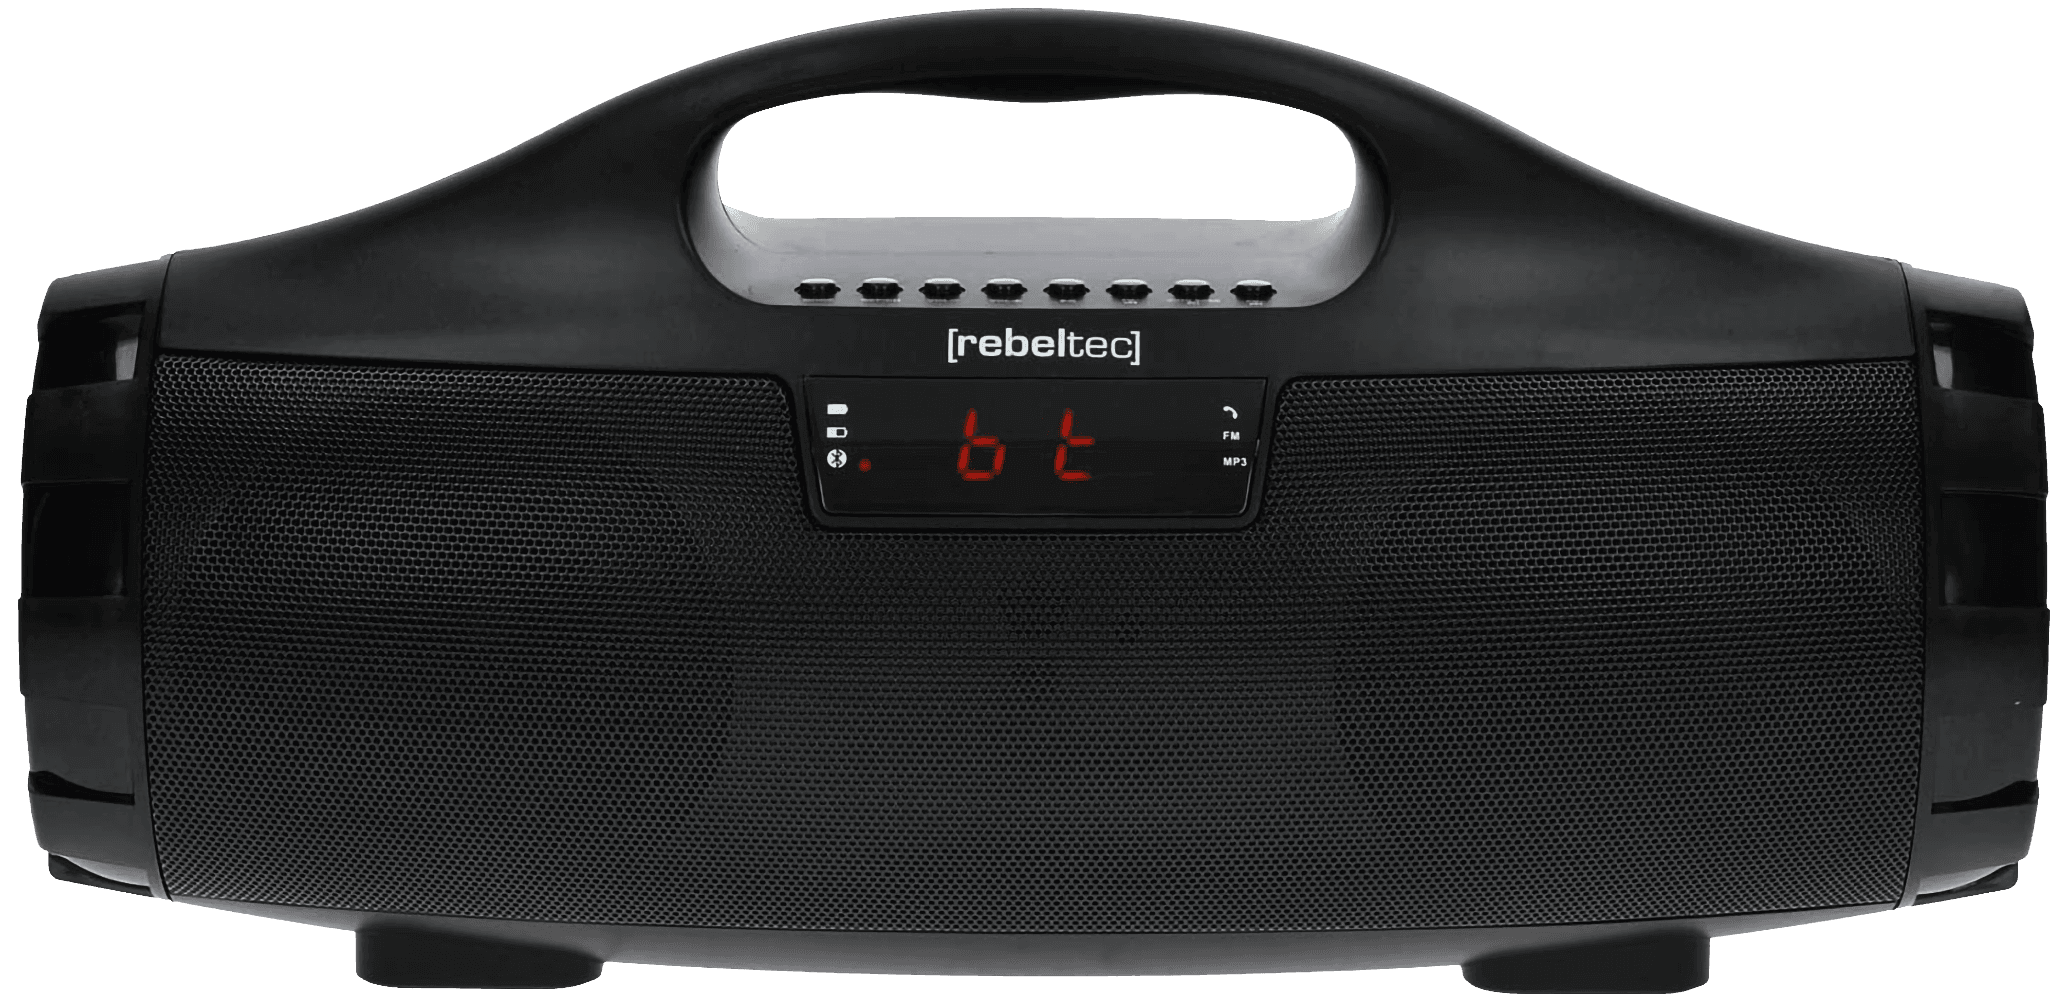 LG V20 Dual kompatibilis bluetooth hangszóró Rebeltec Soundbox 390 fekete